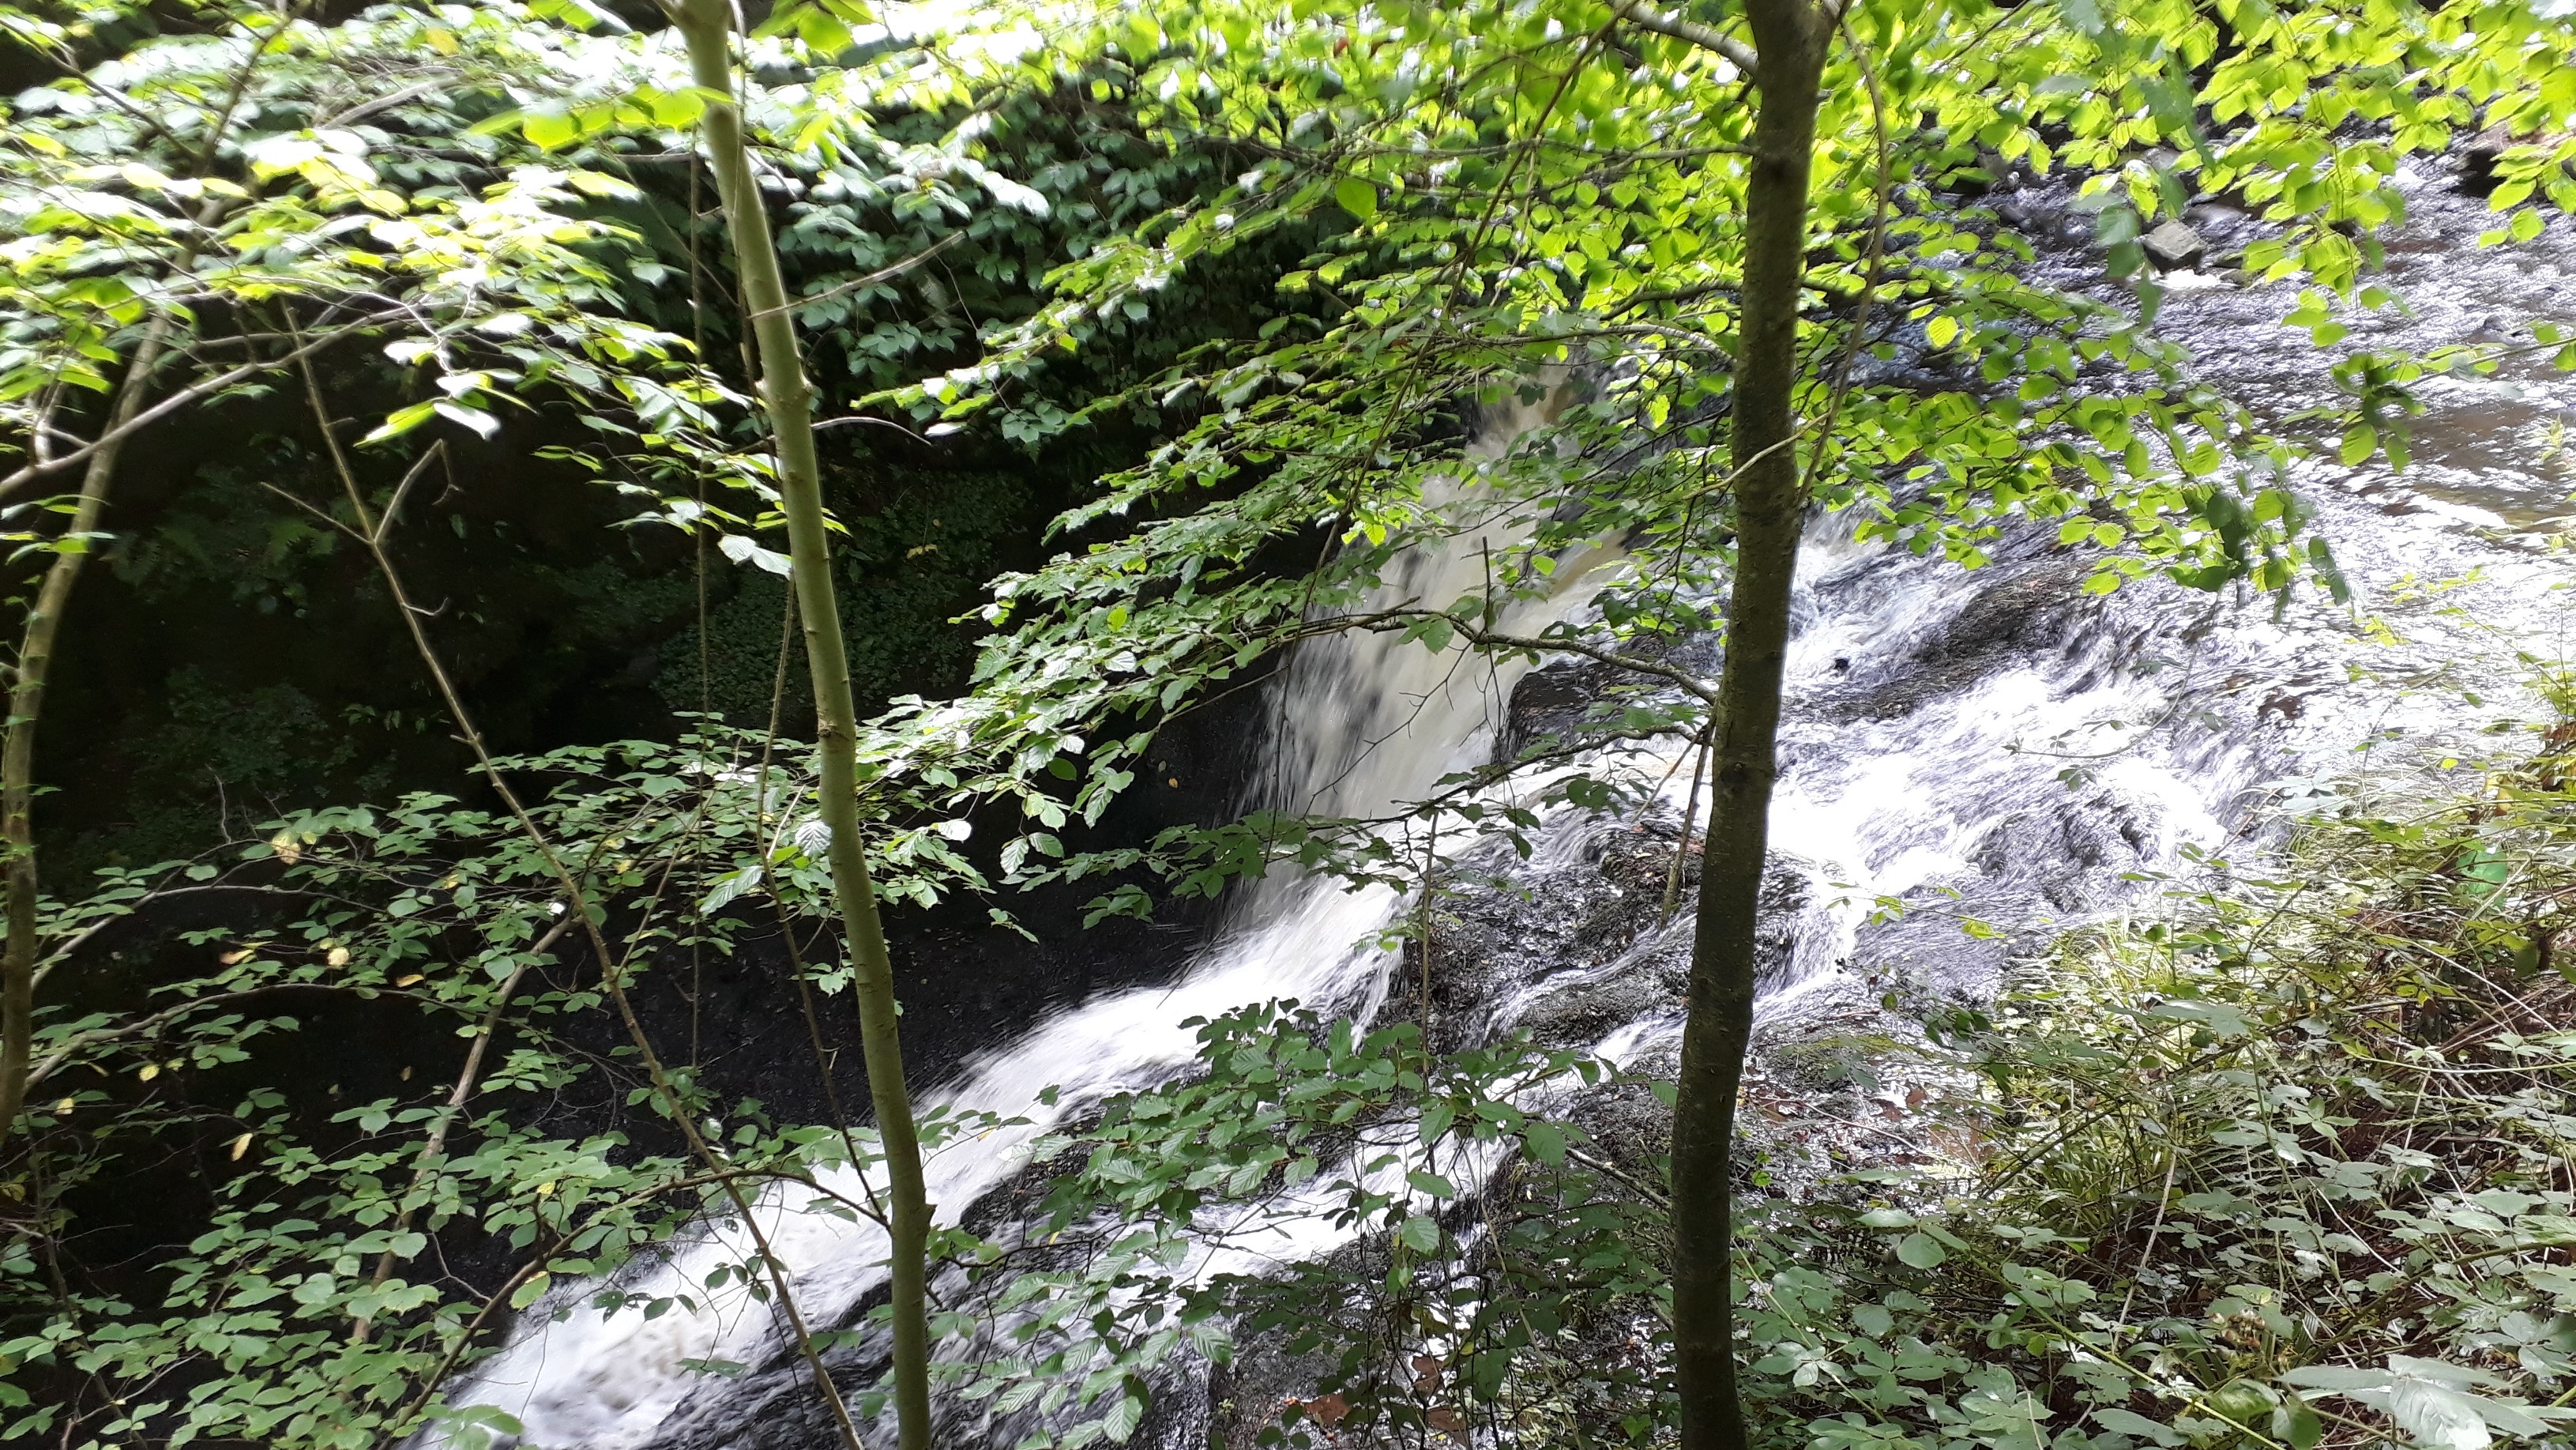 Part of the Glenoe Waterfalls, near Larne.